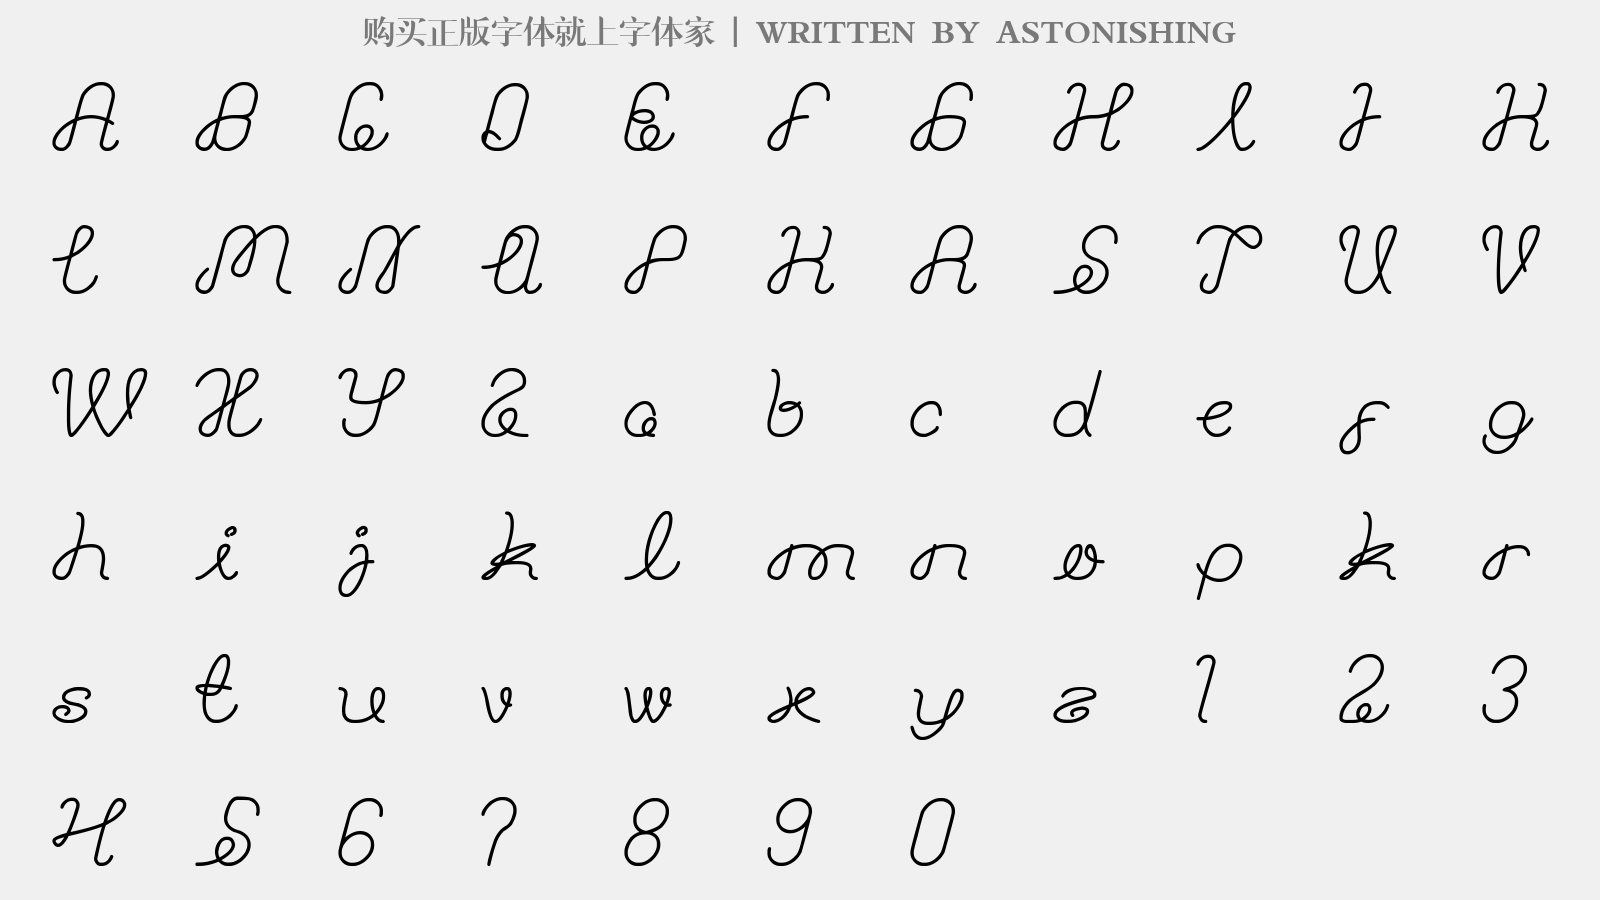 ASTONISHING - 大写字母/小写字母/数字